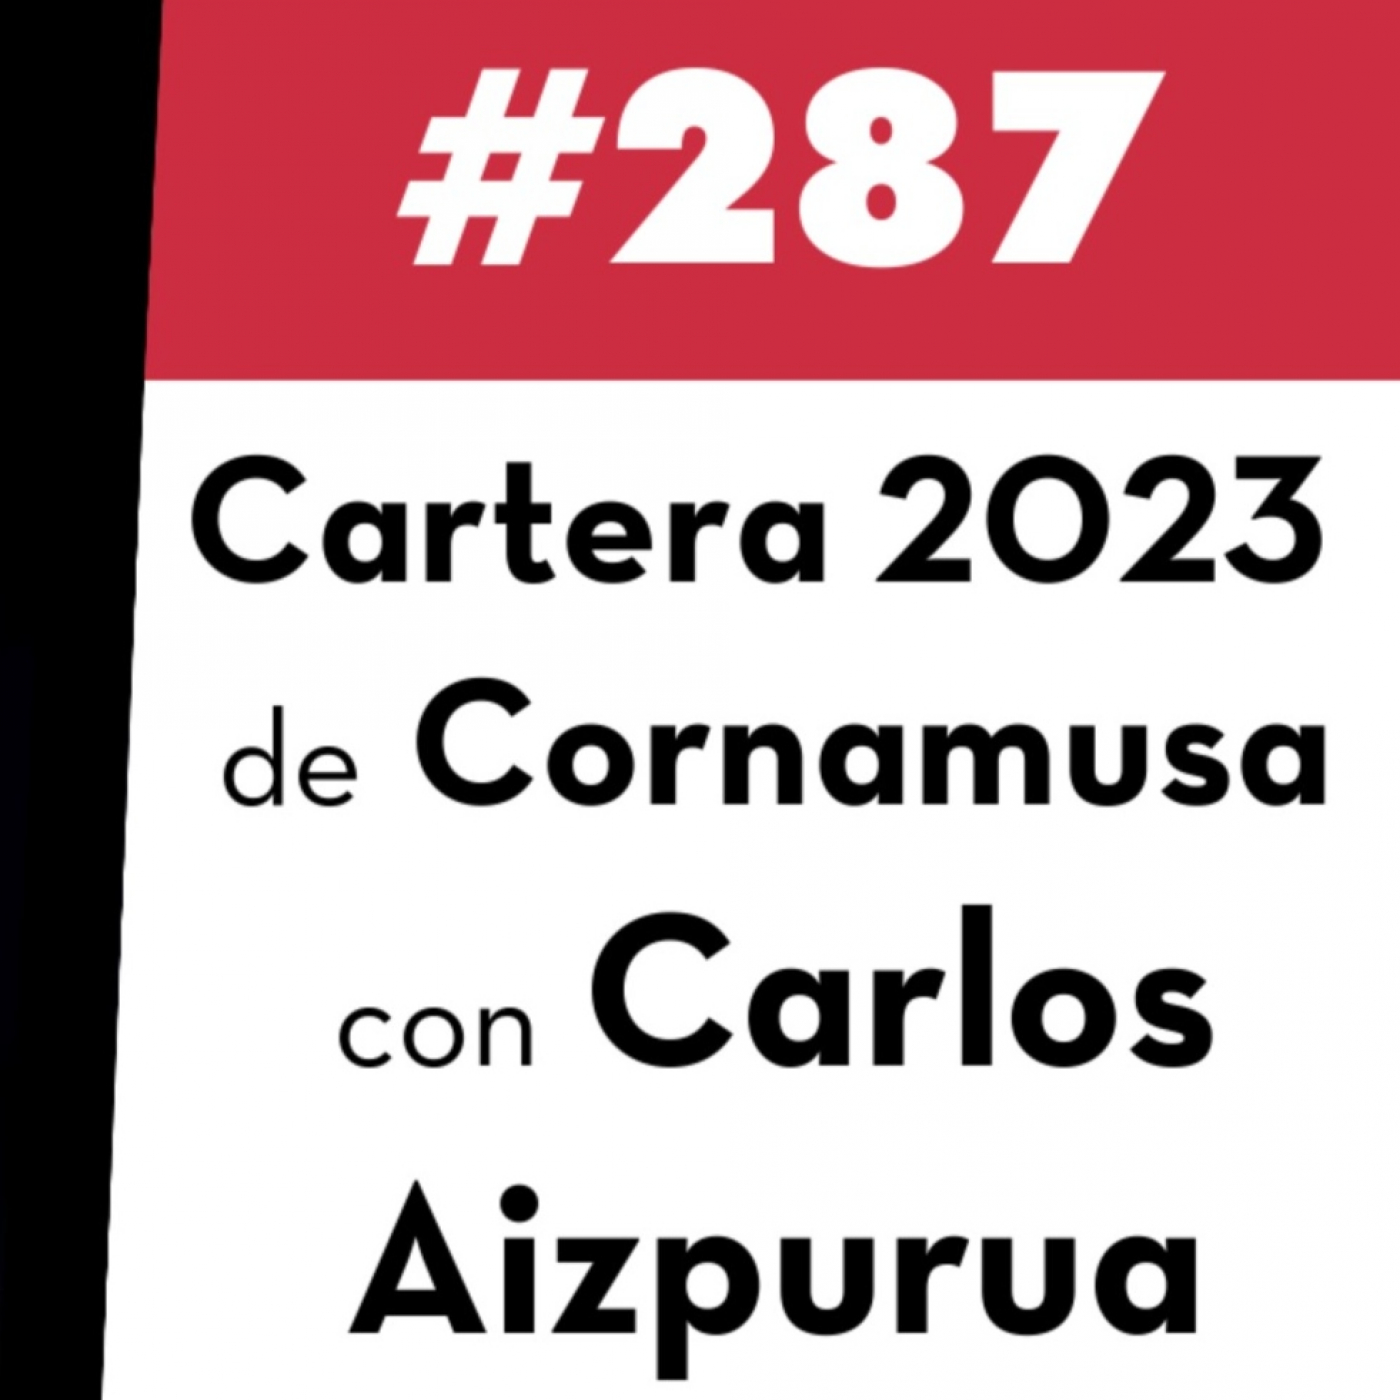 287. Cartera 2023 de Cornamusa con Carlos Aizpurua